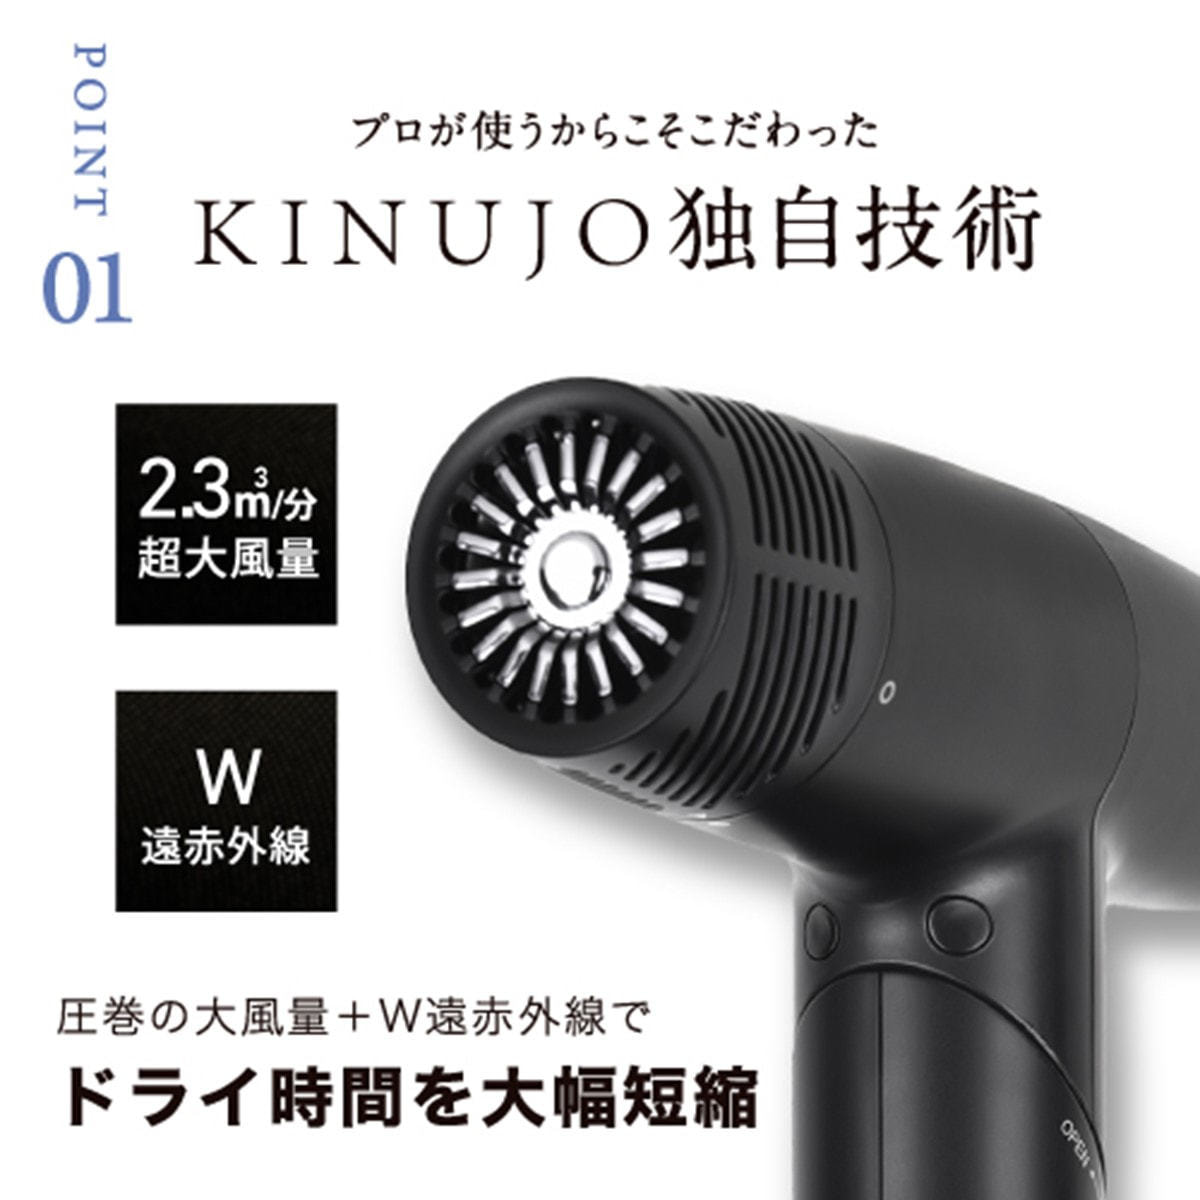 KINUJO PRO Dryer キヌージョプロヘアドライヤー-